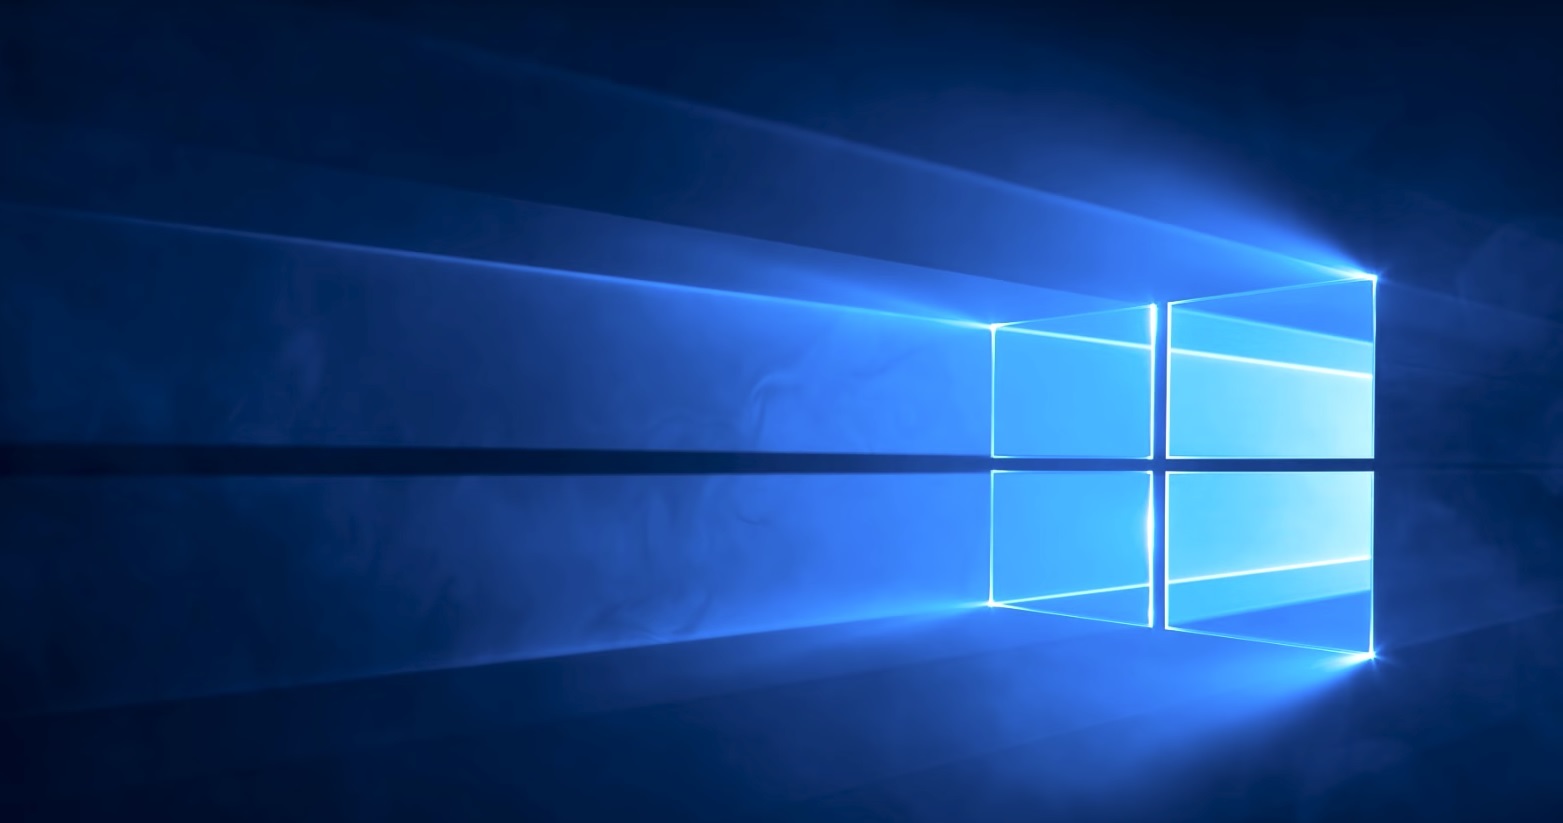 Windows reference image (Image: EP)